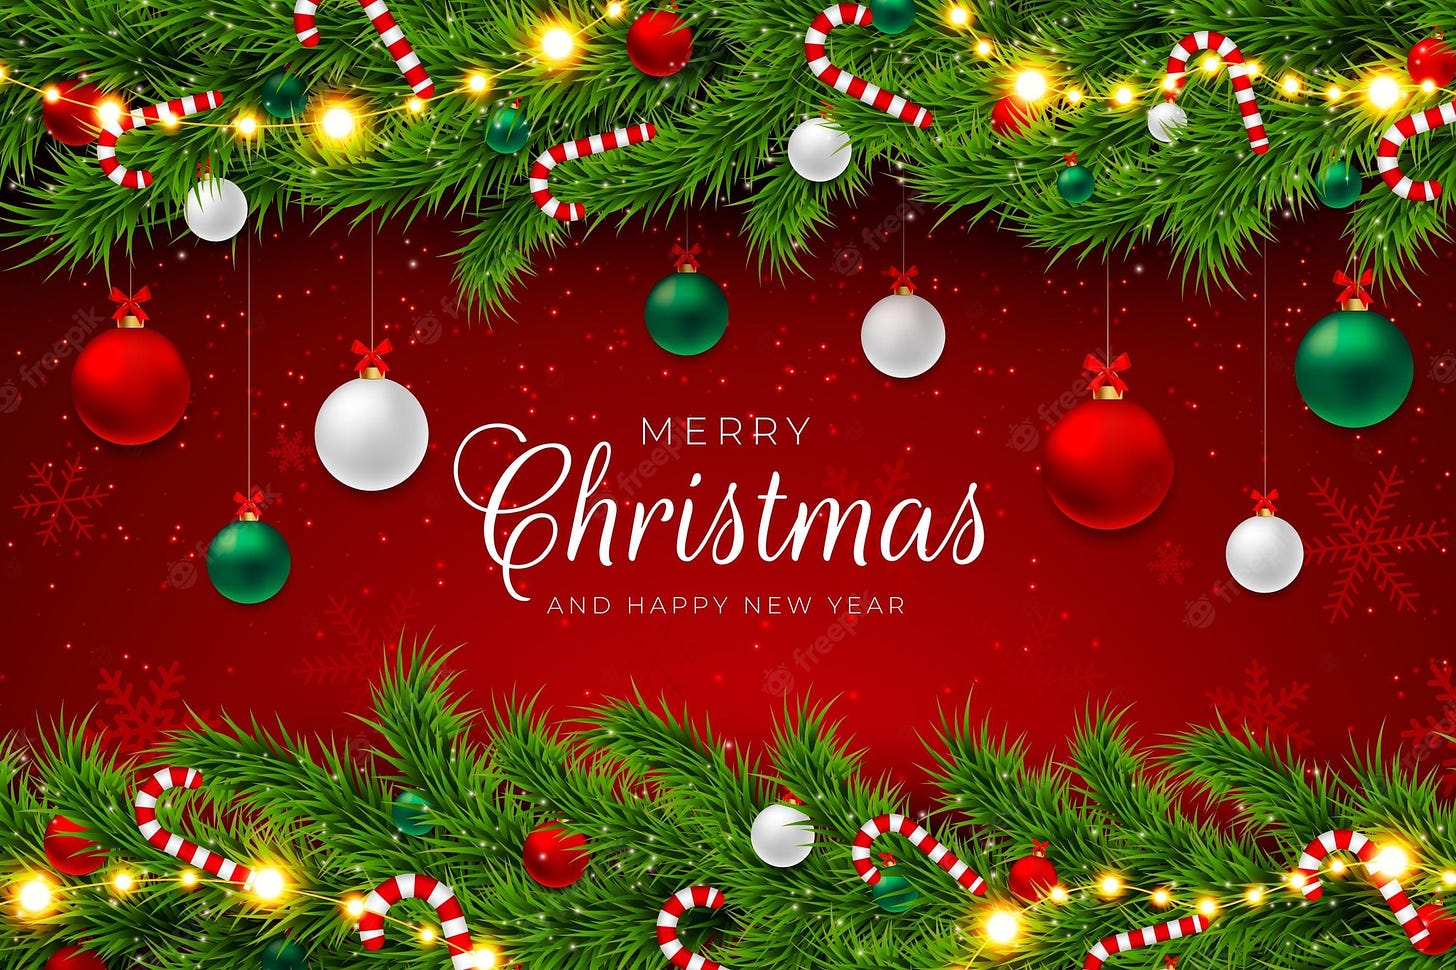 Christmas Vectors & Illustrations for Free Download | Freepik